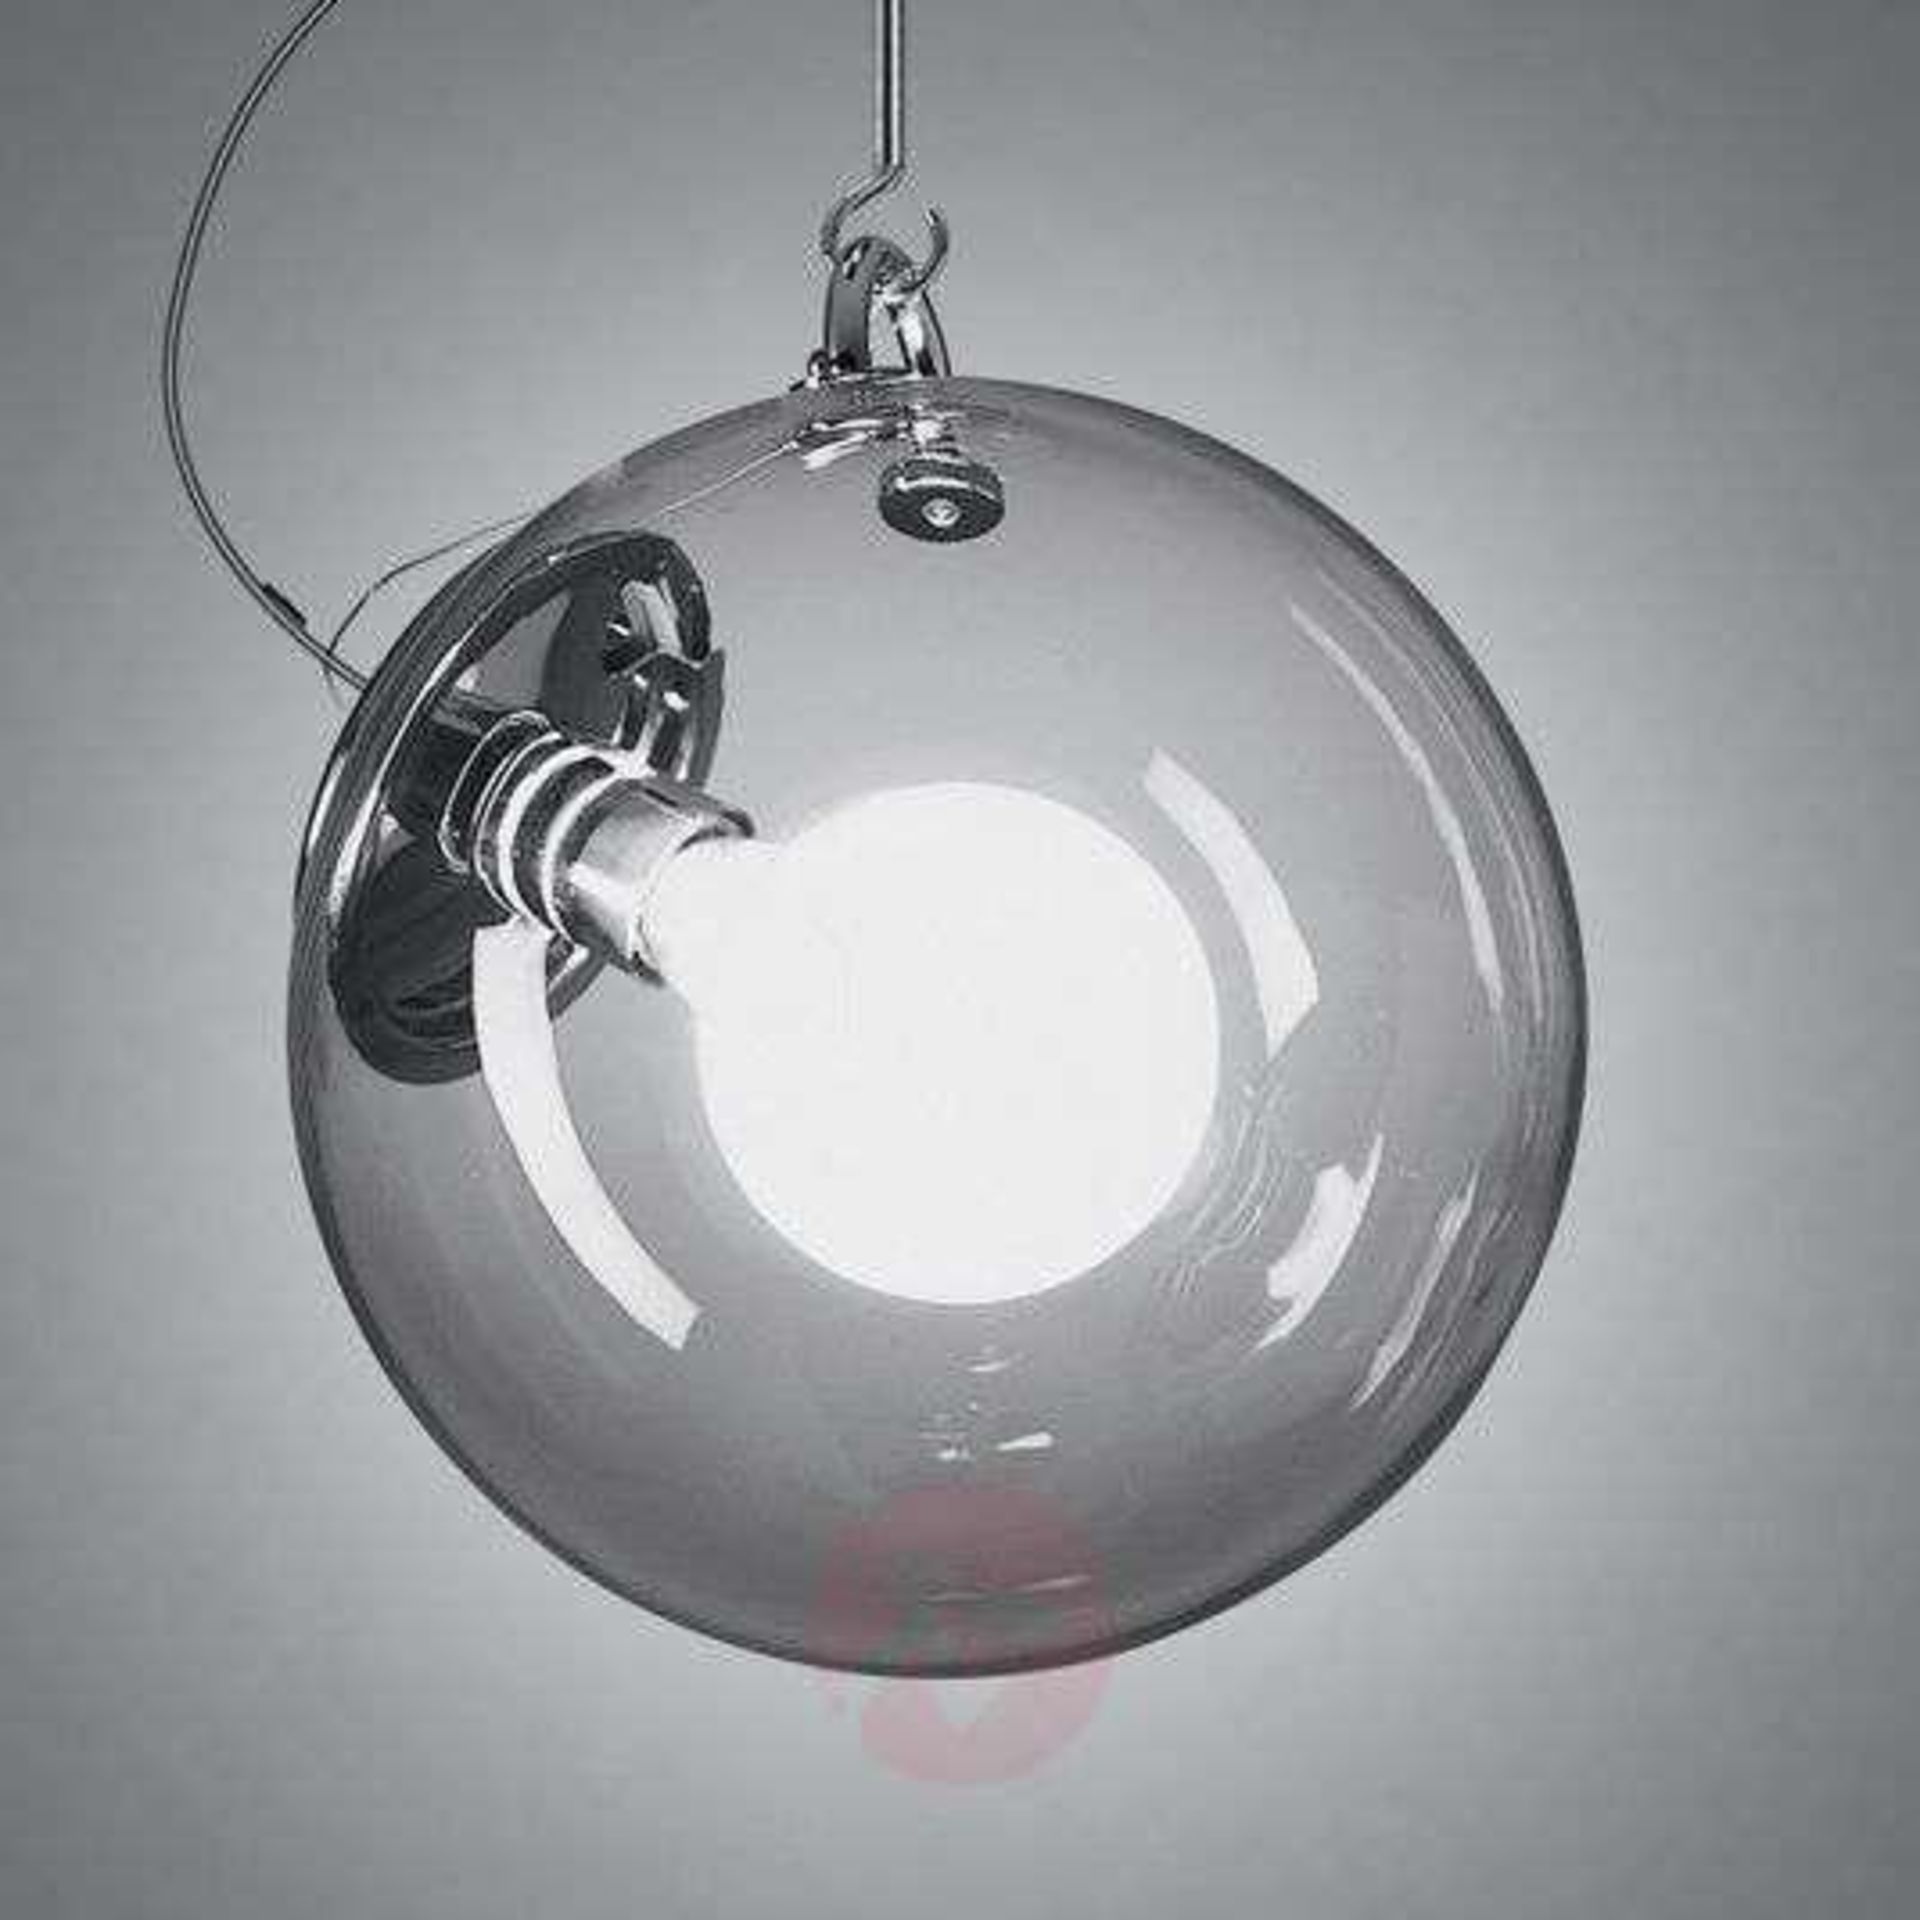 Artemide Miconos glass pendant - Image 2 of 2